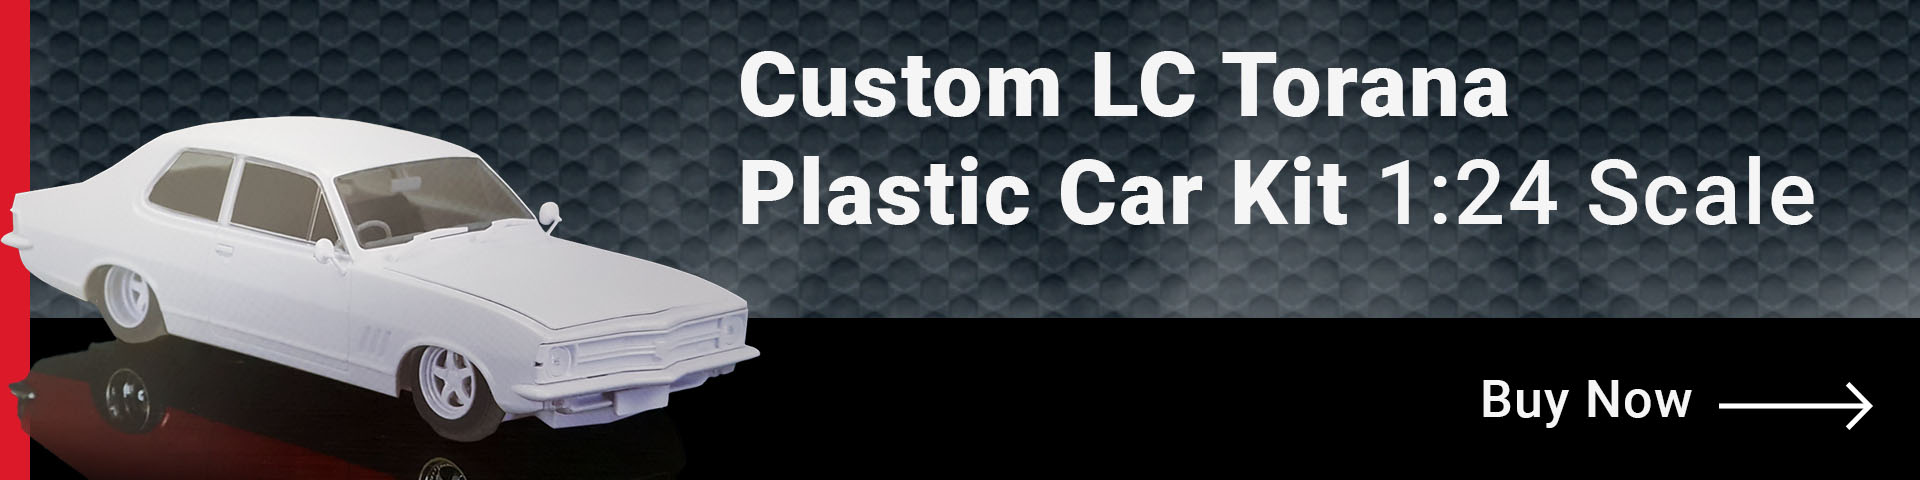 Buy the Custom LC Torana Plastic Car kit at 1:24 scale